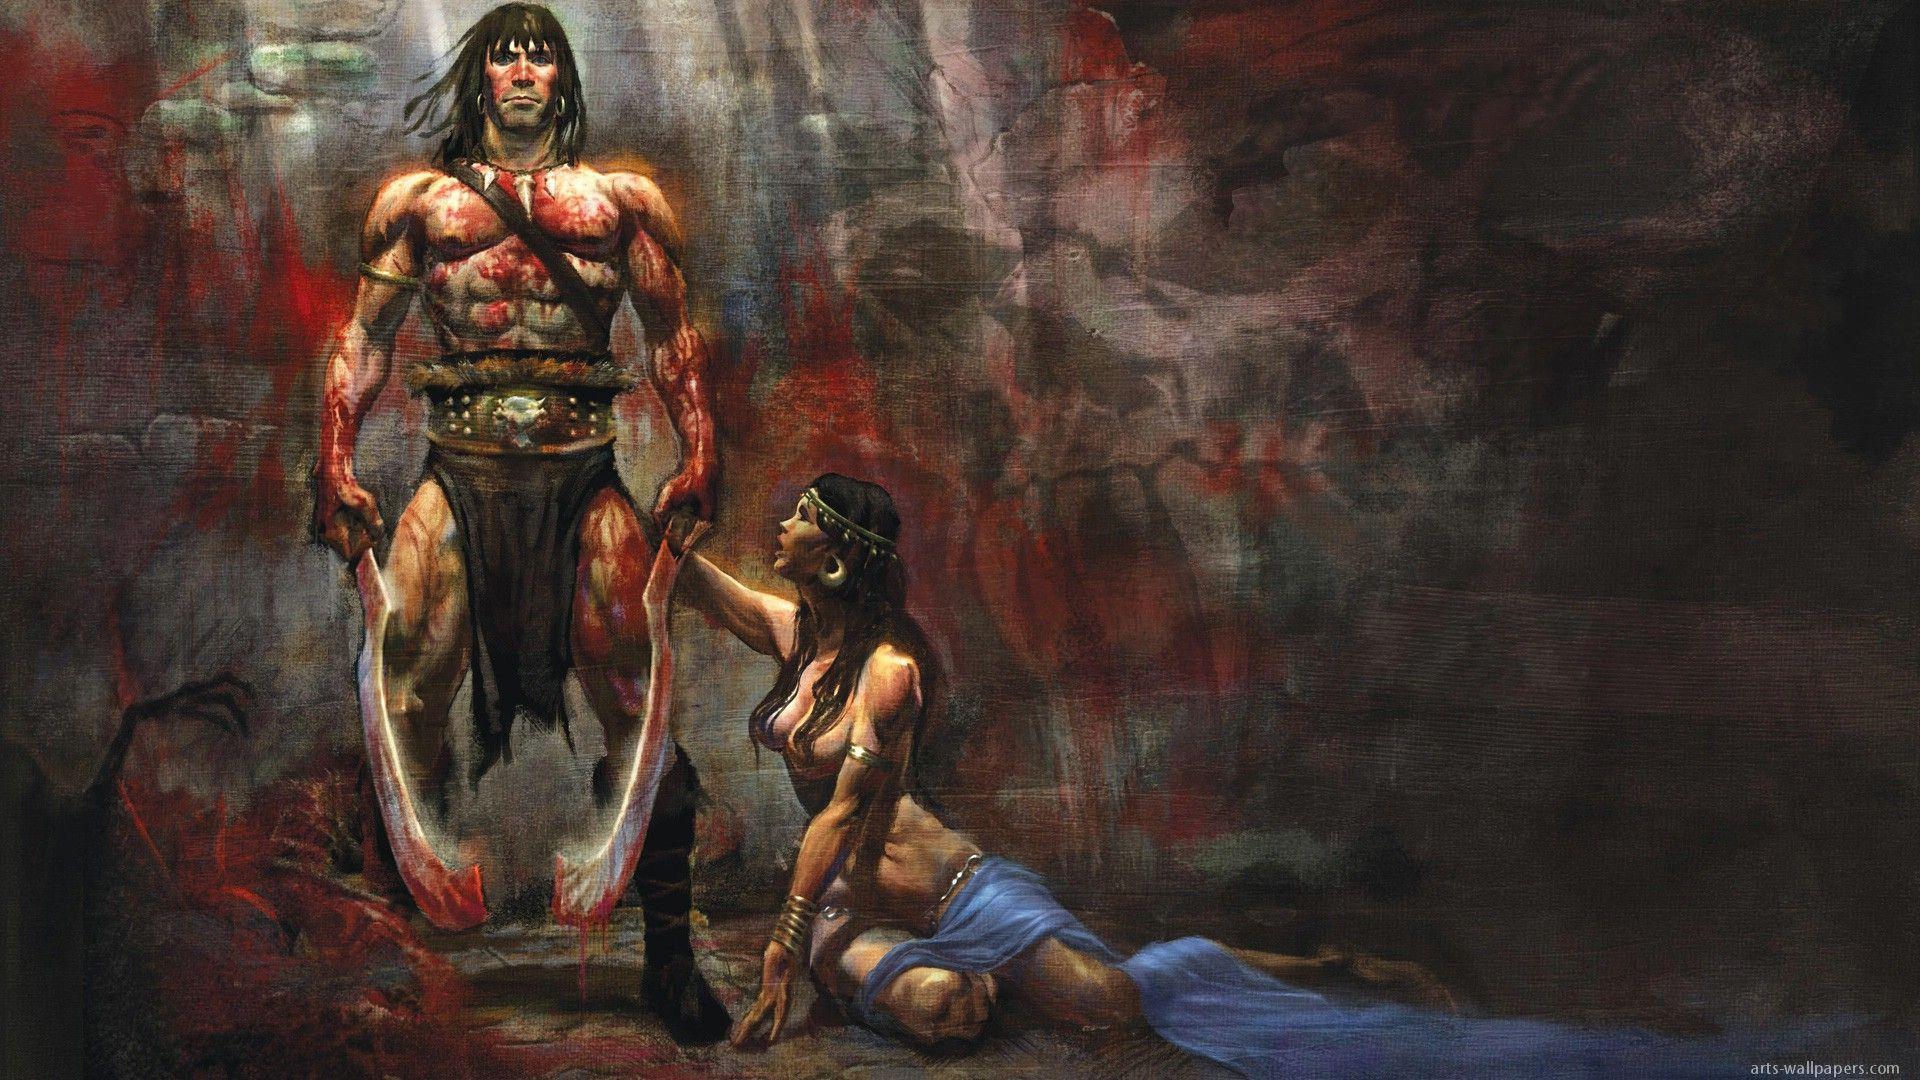 Conan The Barbarian Wallpaper Image & Picture